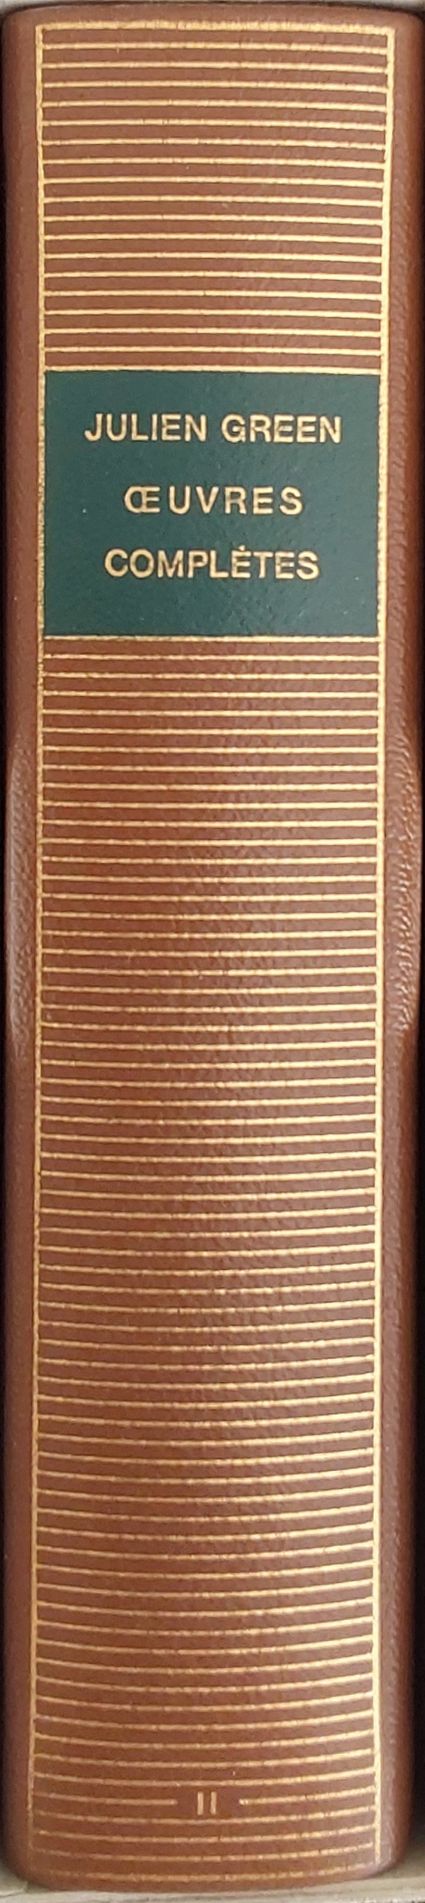 Volume 243 de Julien Green dans la Bibliothèque de la Pléiade. 